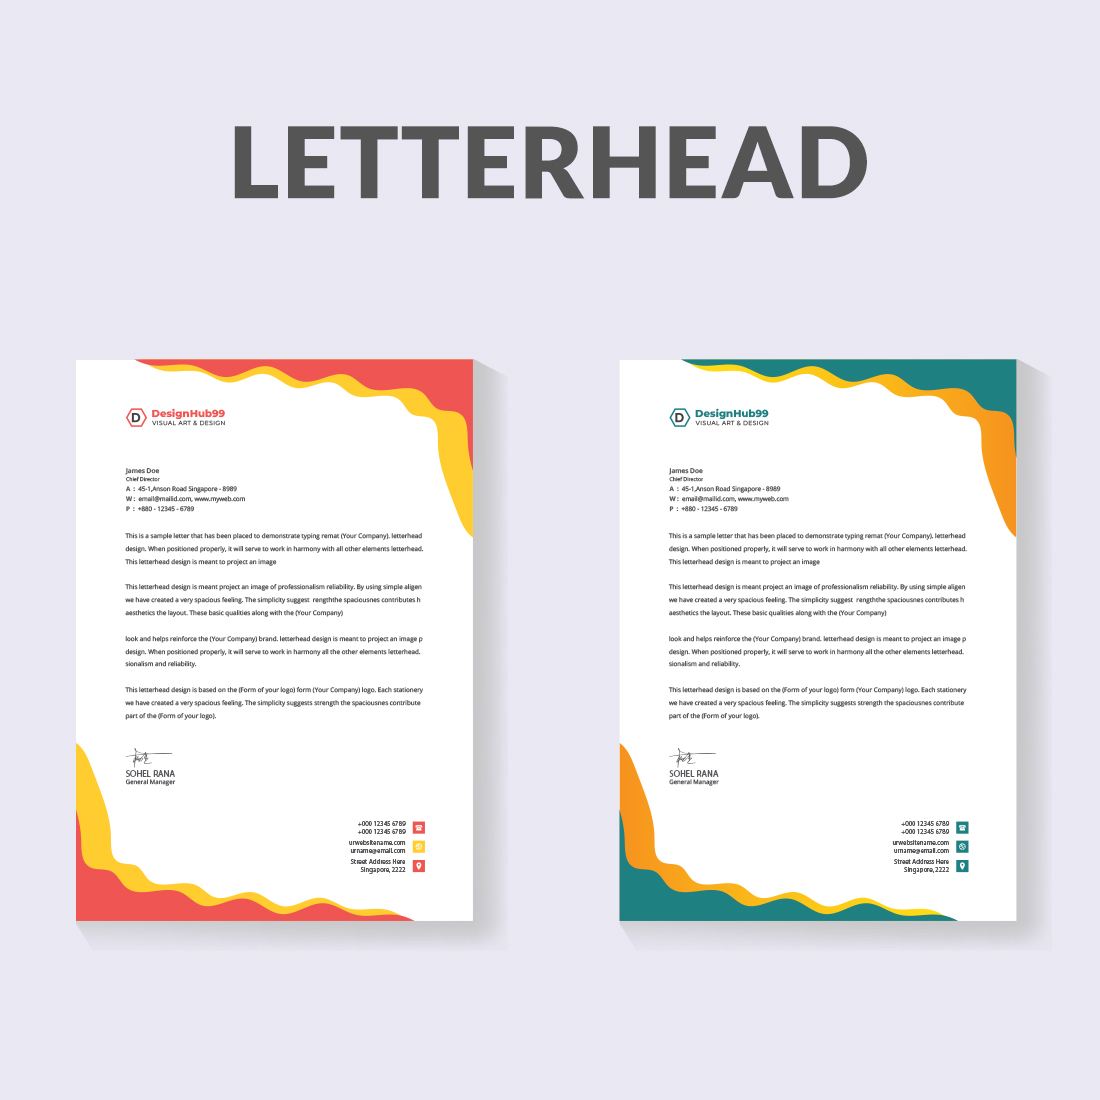 letter head, letterhead, business letterhead design preview image.